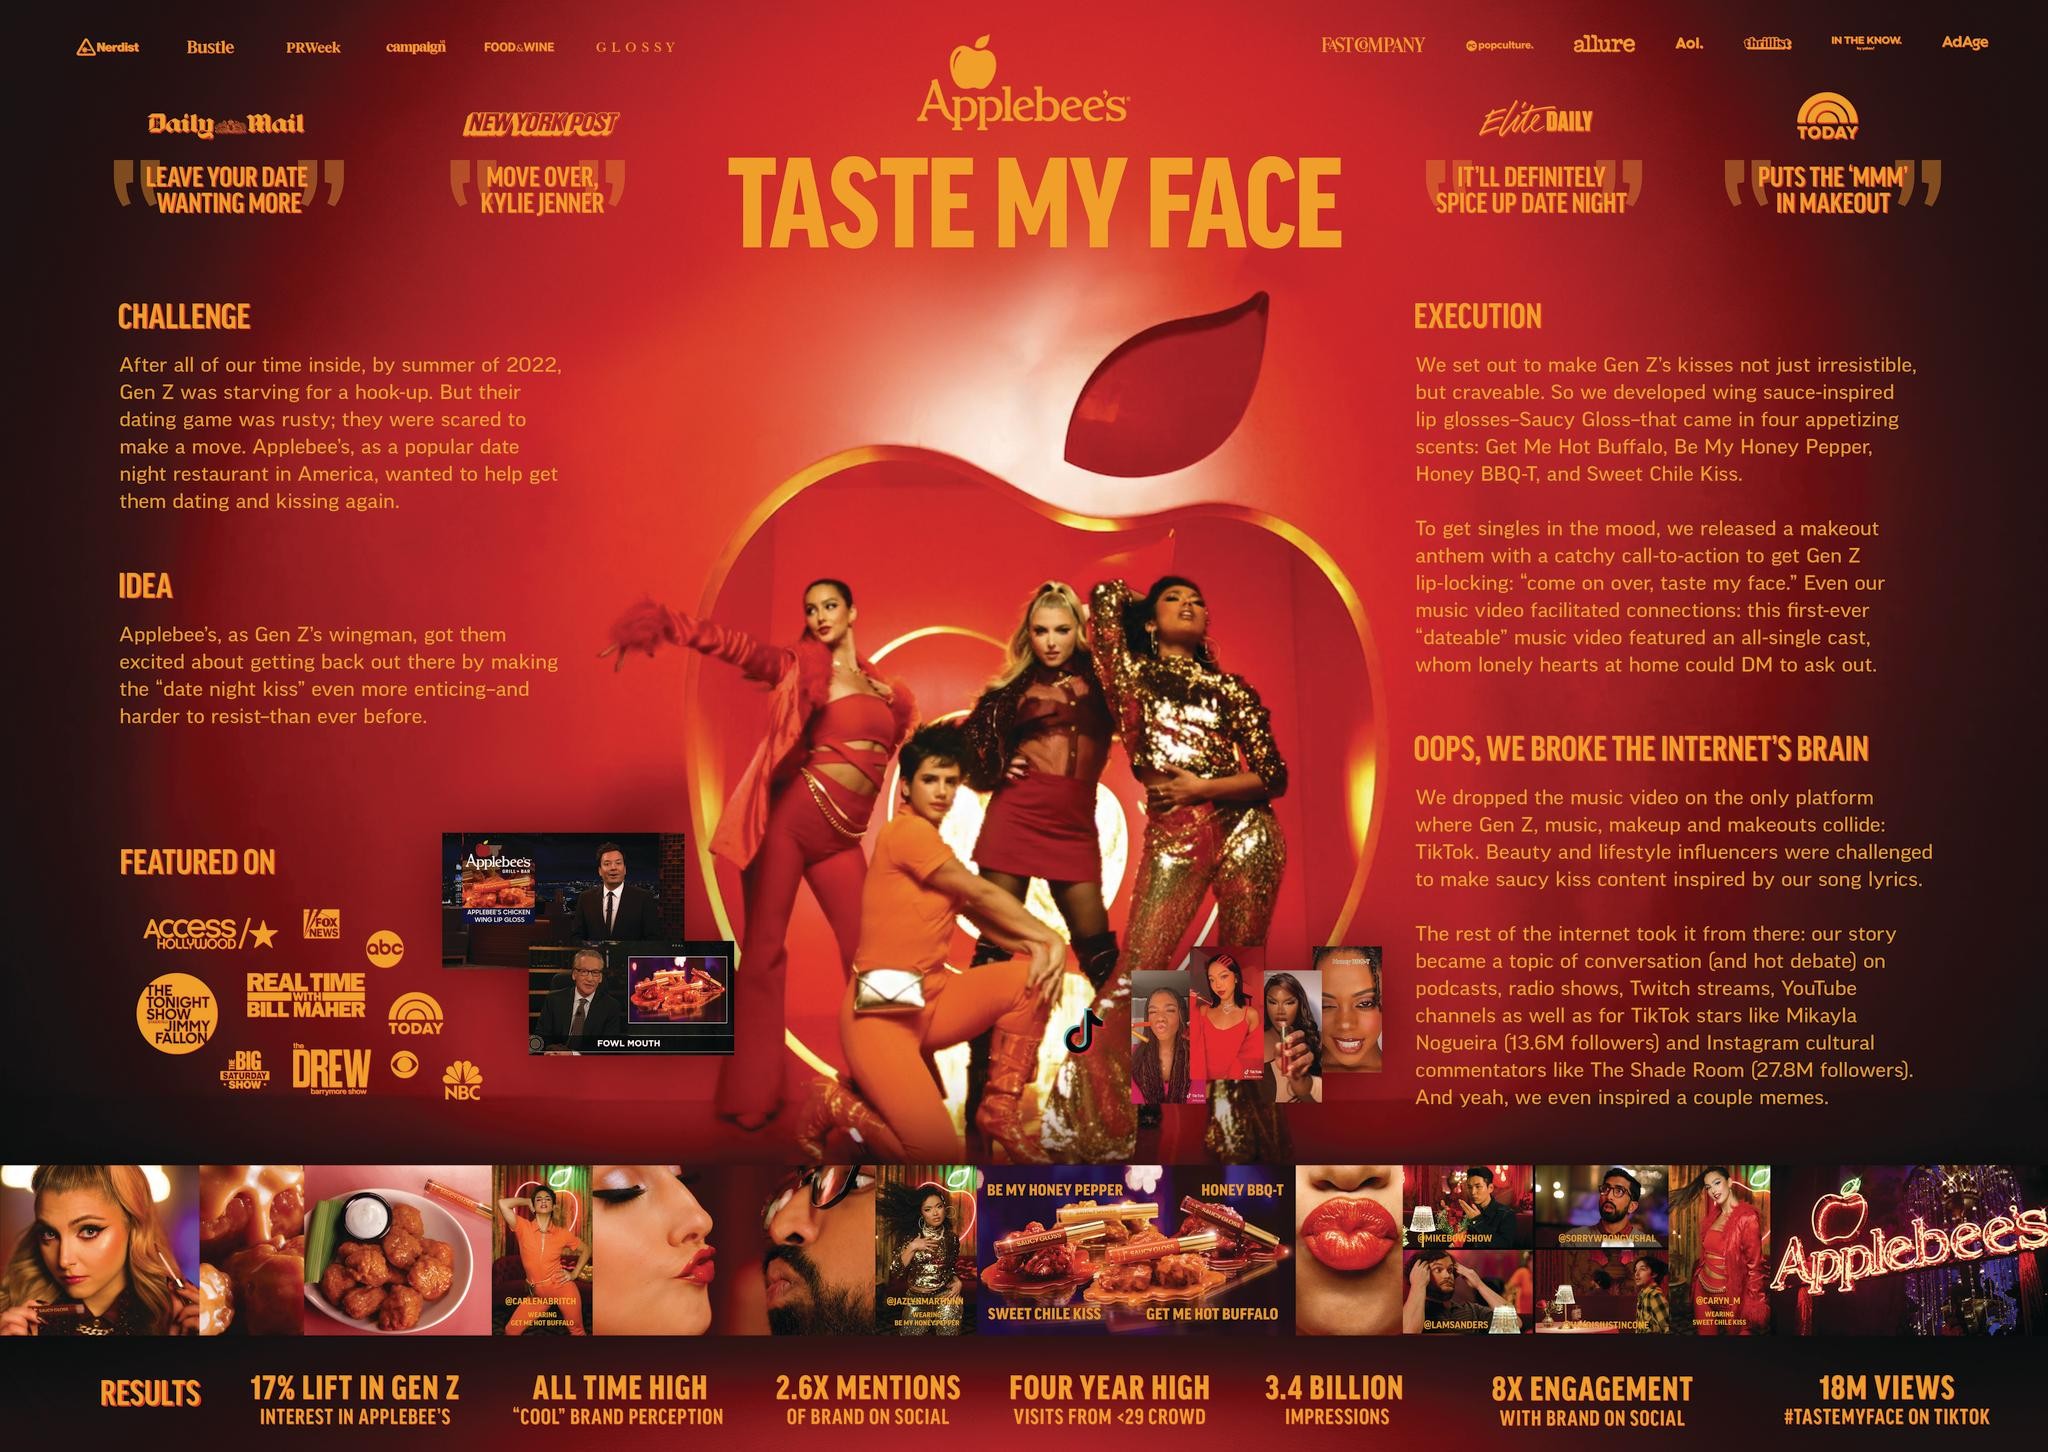 Taste My Face